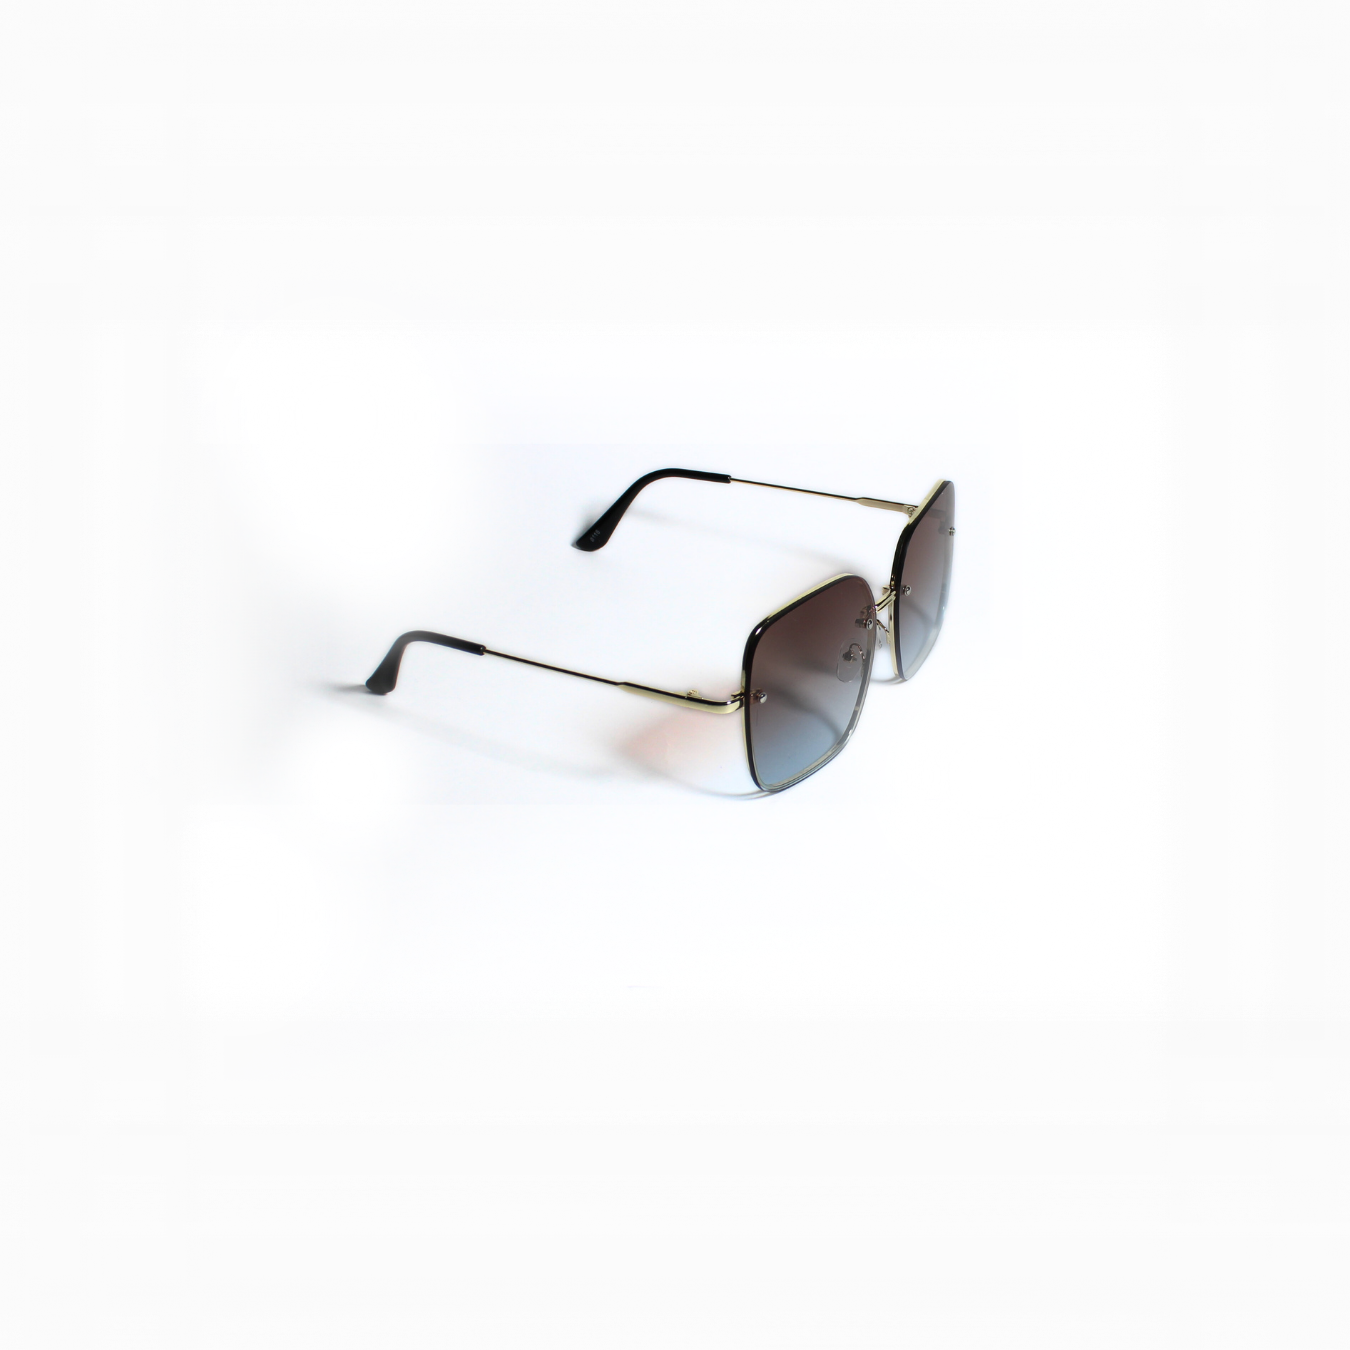 CHLOE 004 I Sunglasses for Women - Specsview